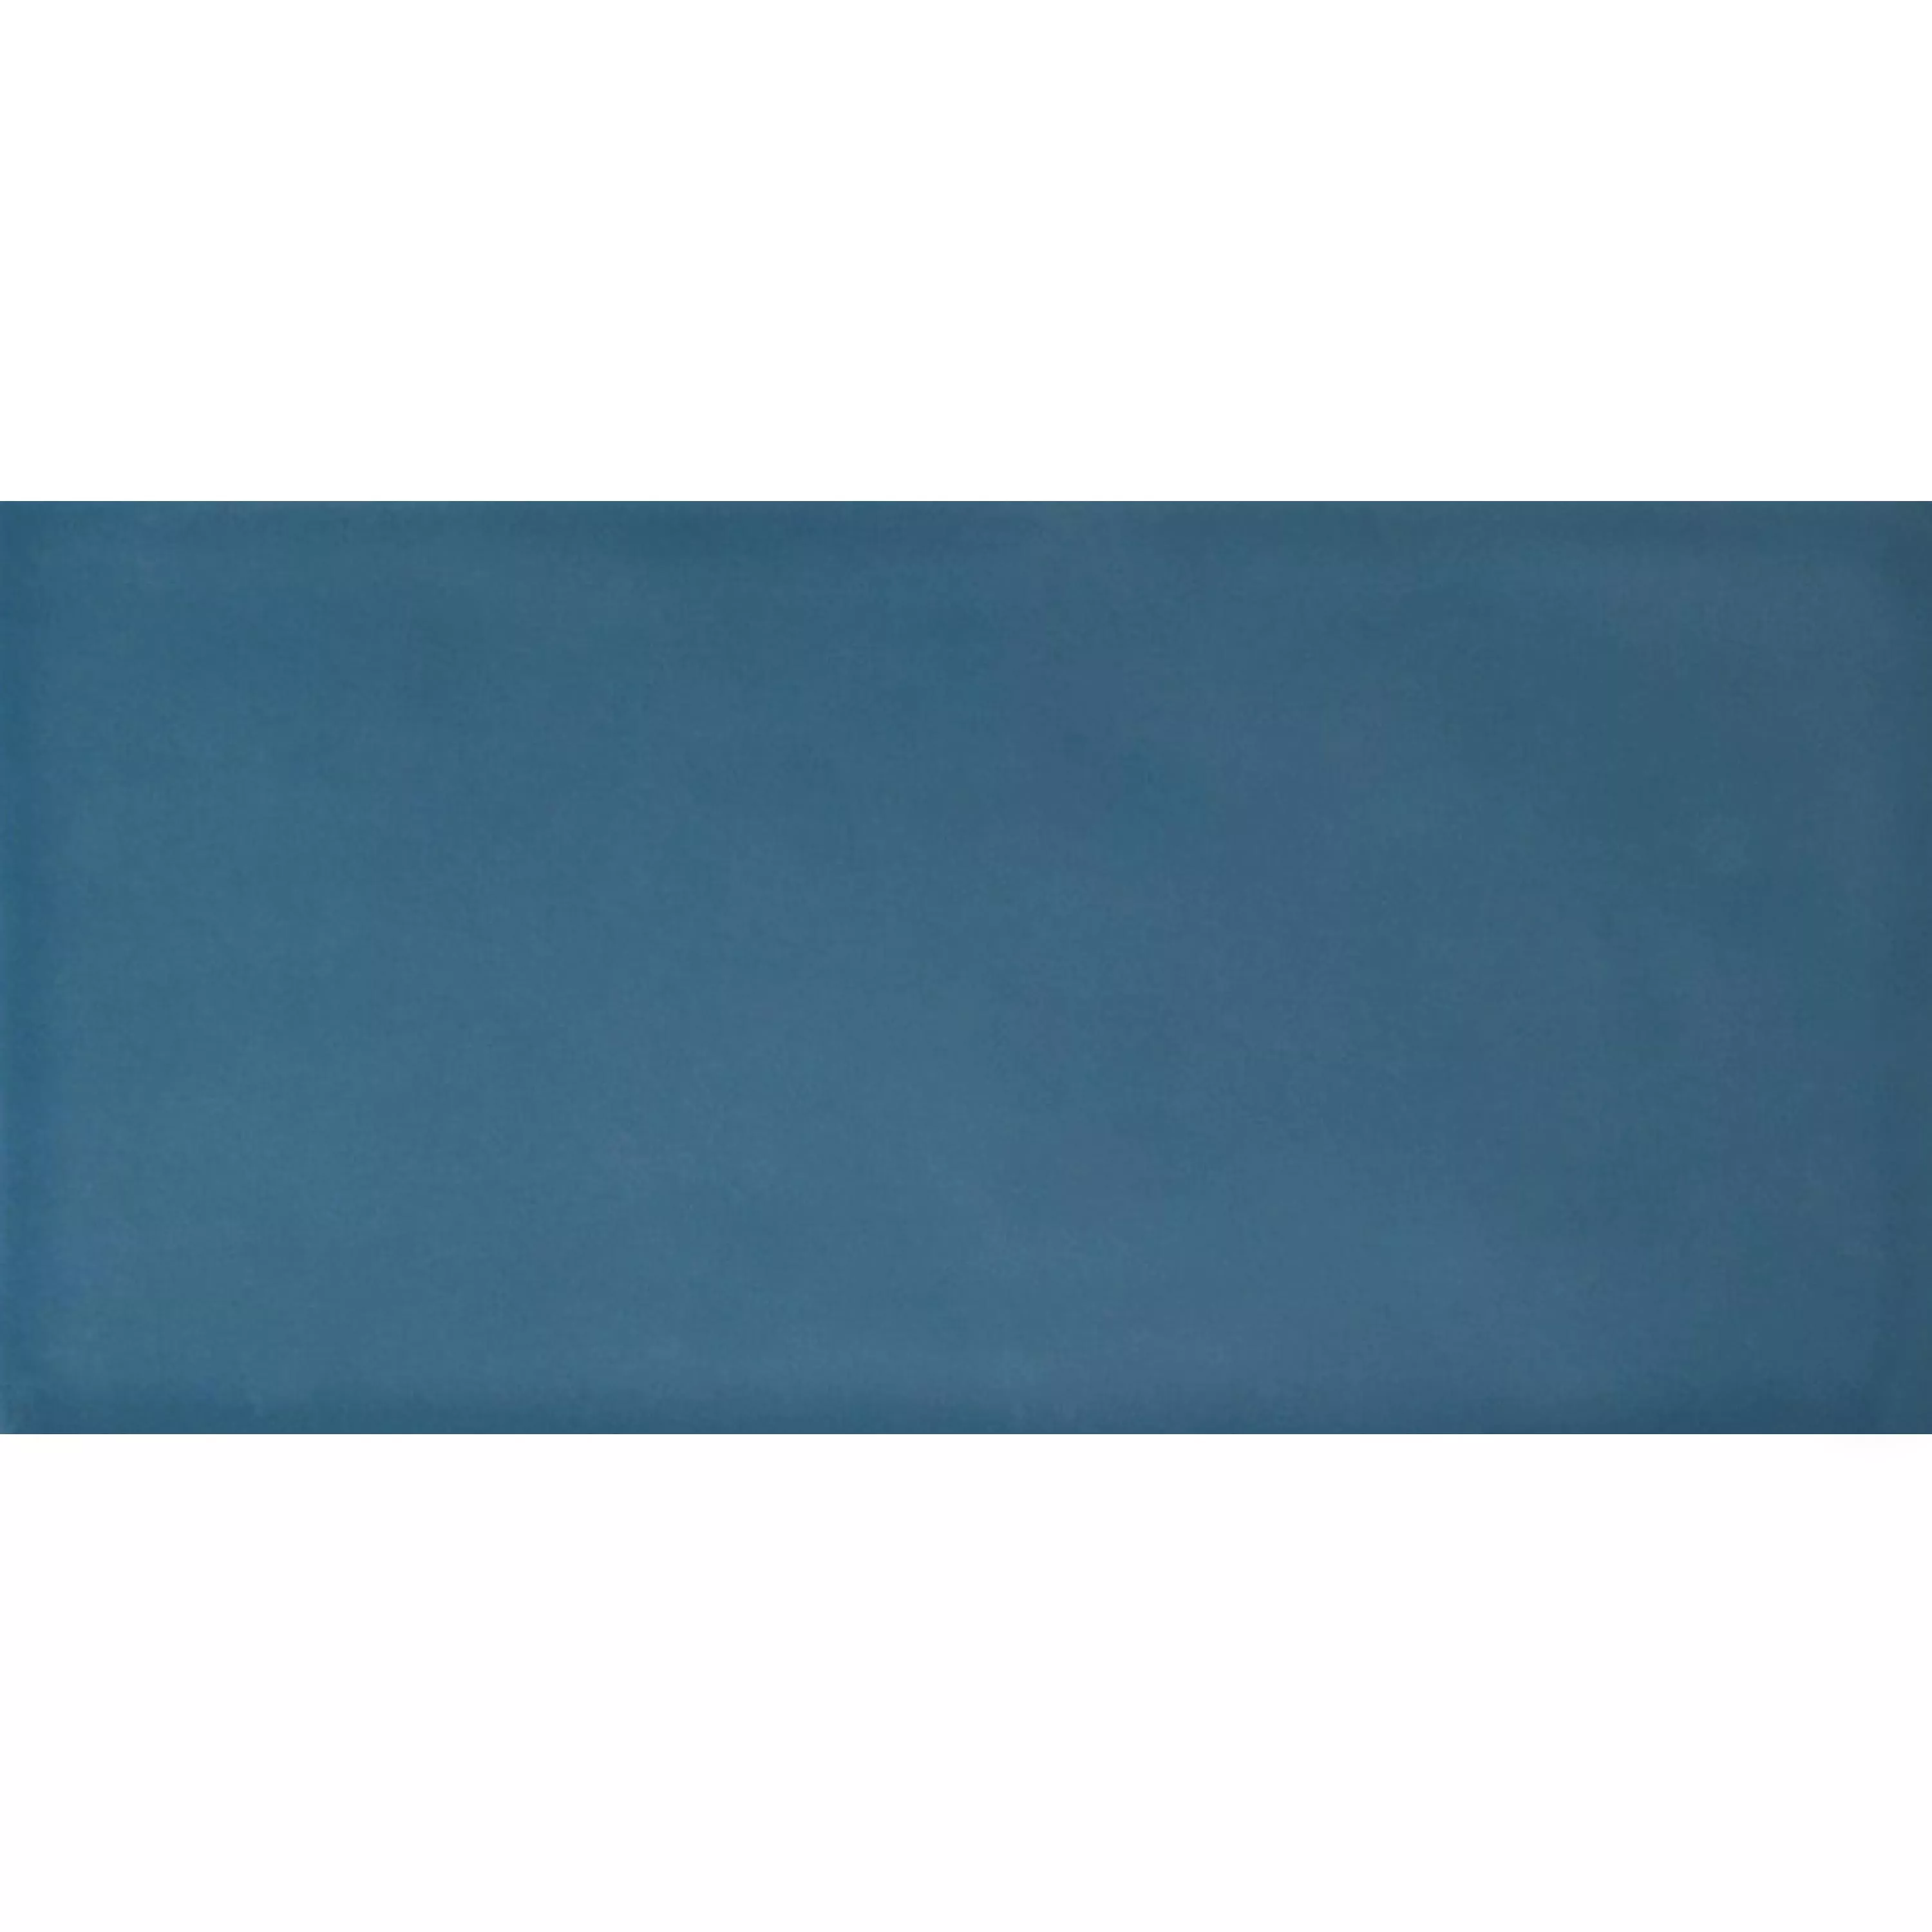 Sample Wandtegels Mogadischu 7,5x15cm Blauw Mat